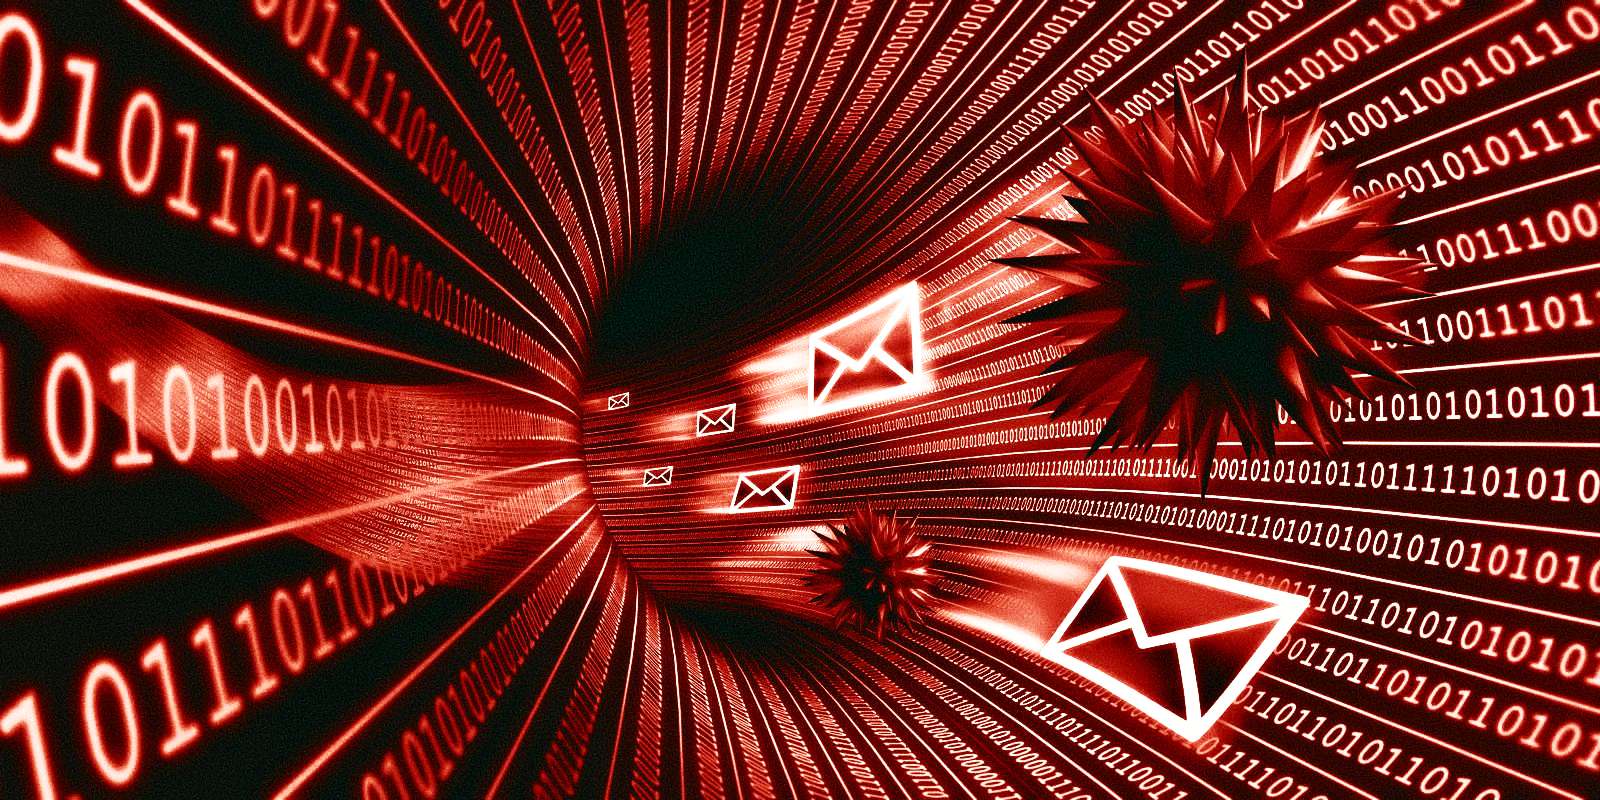 Phishing emails distributing malware